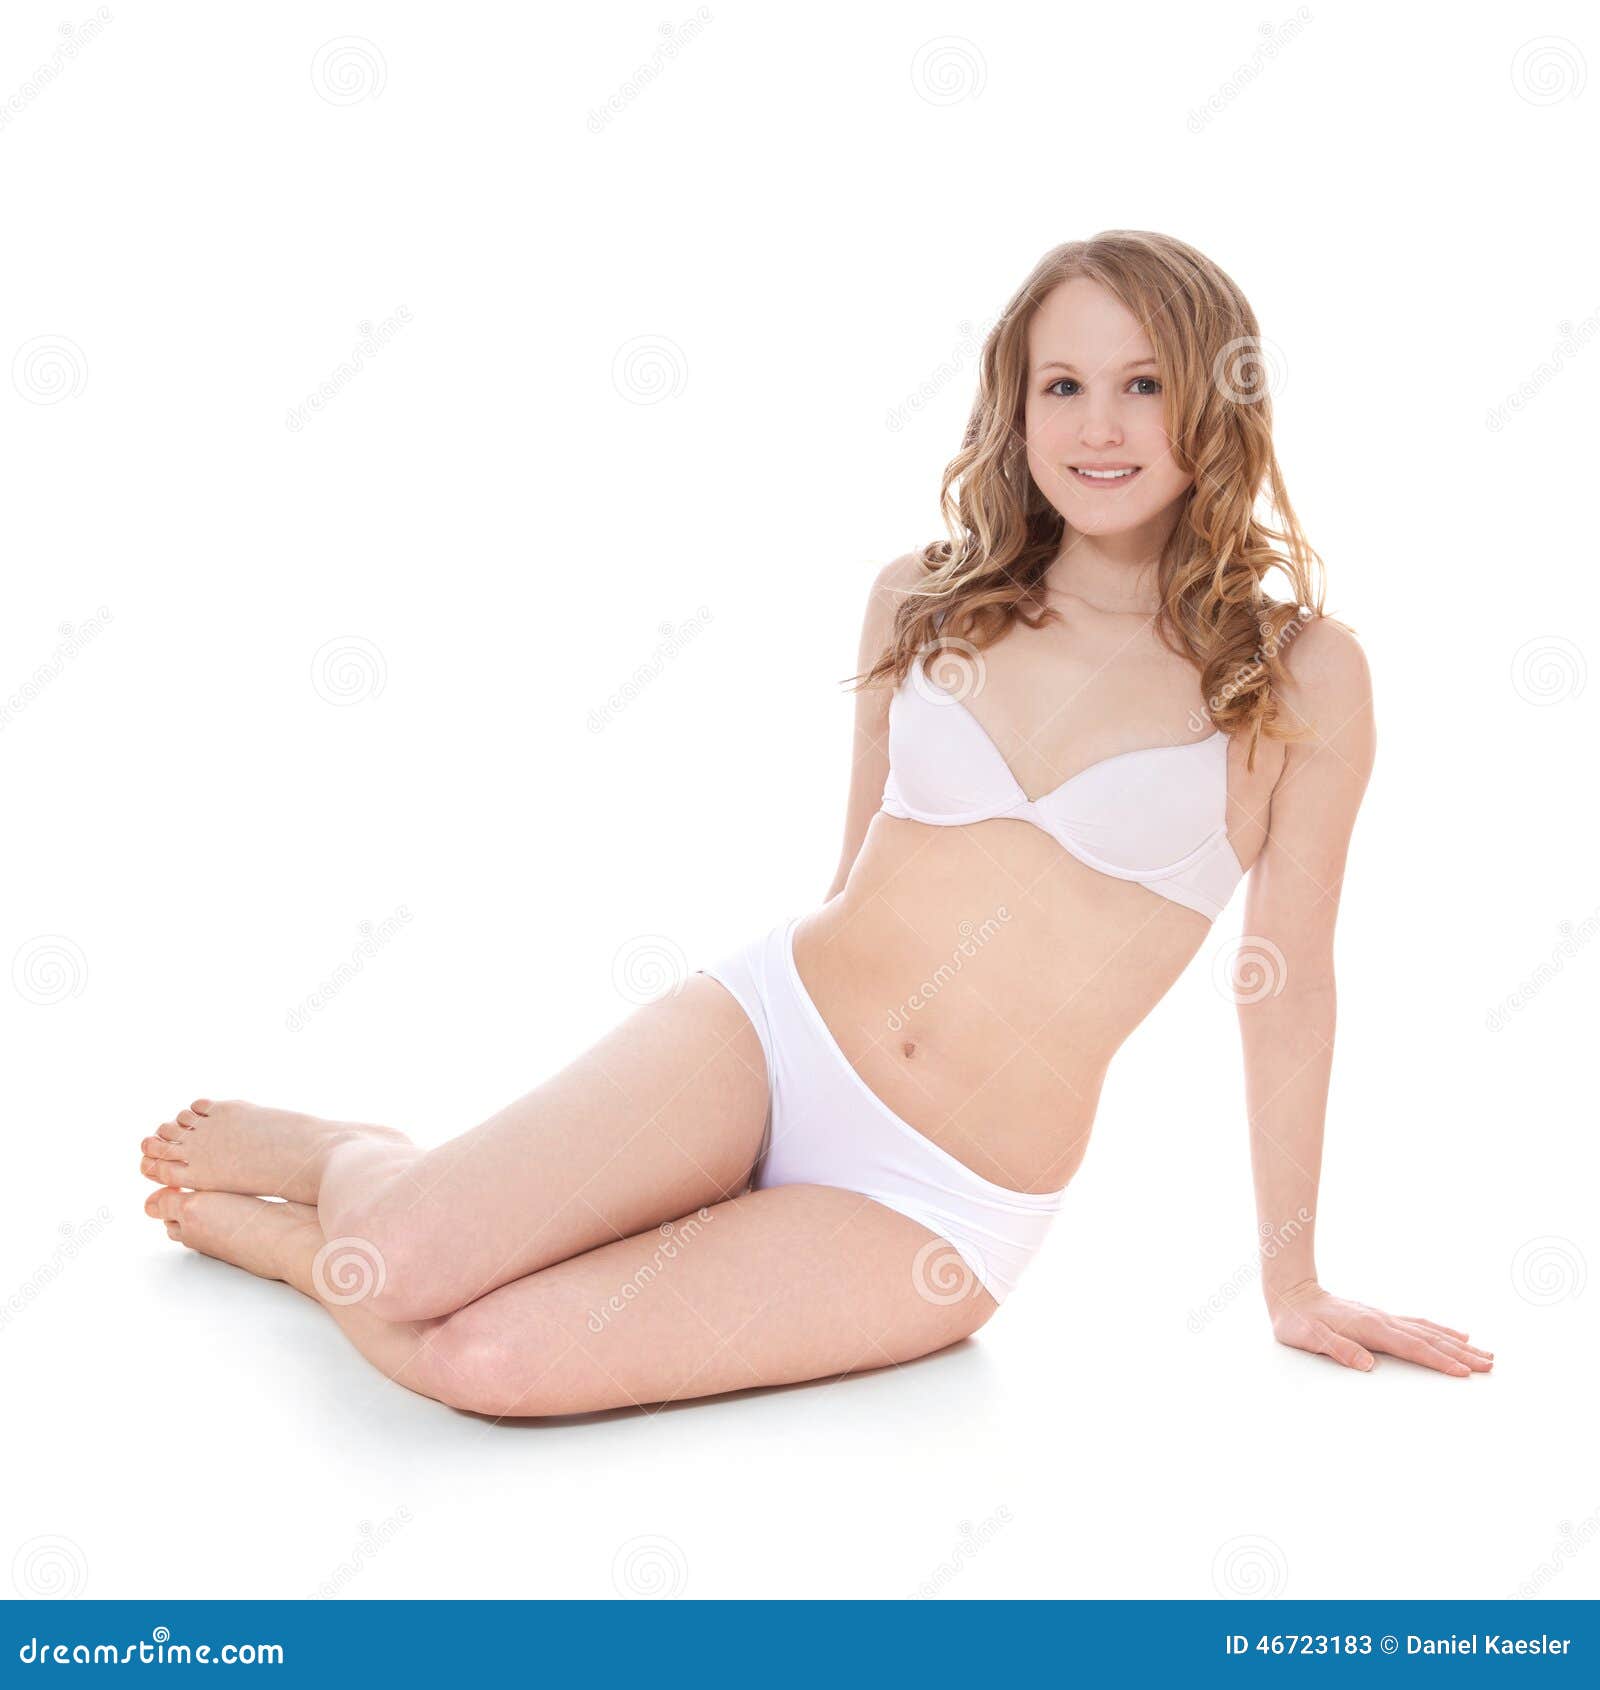 carla billingsley recommends emma stone bikini photoshoot pic